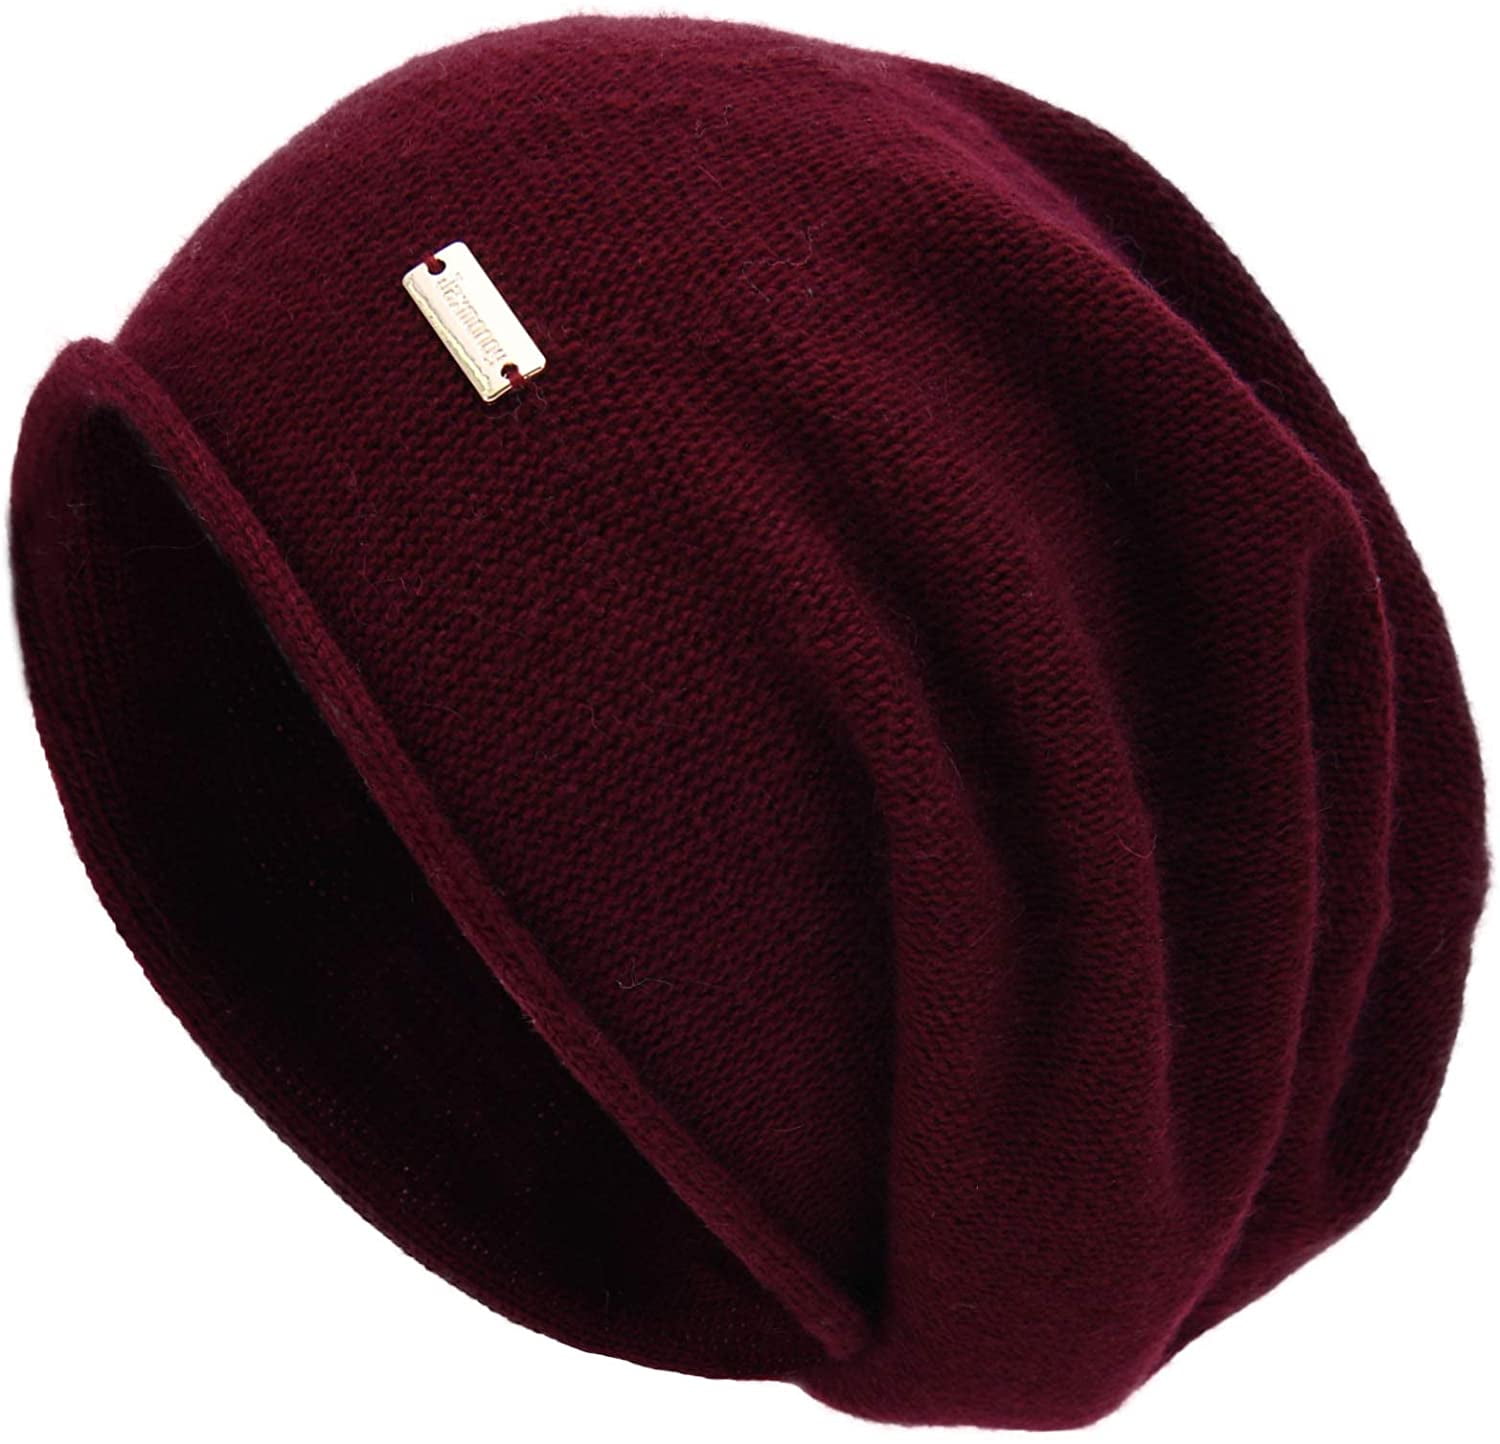 jaxmonoy Cashmere Slouchy Beanies for Women Winter Lightweight Girls Wool Knit Hat Cuffed Soft Warm Slouch Beanie Cap